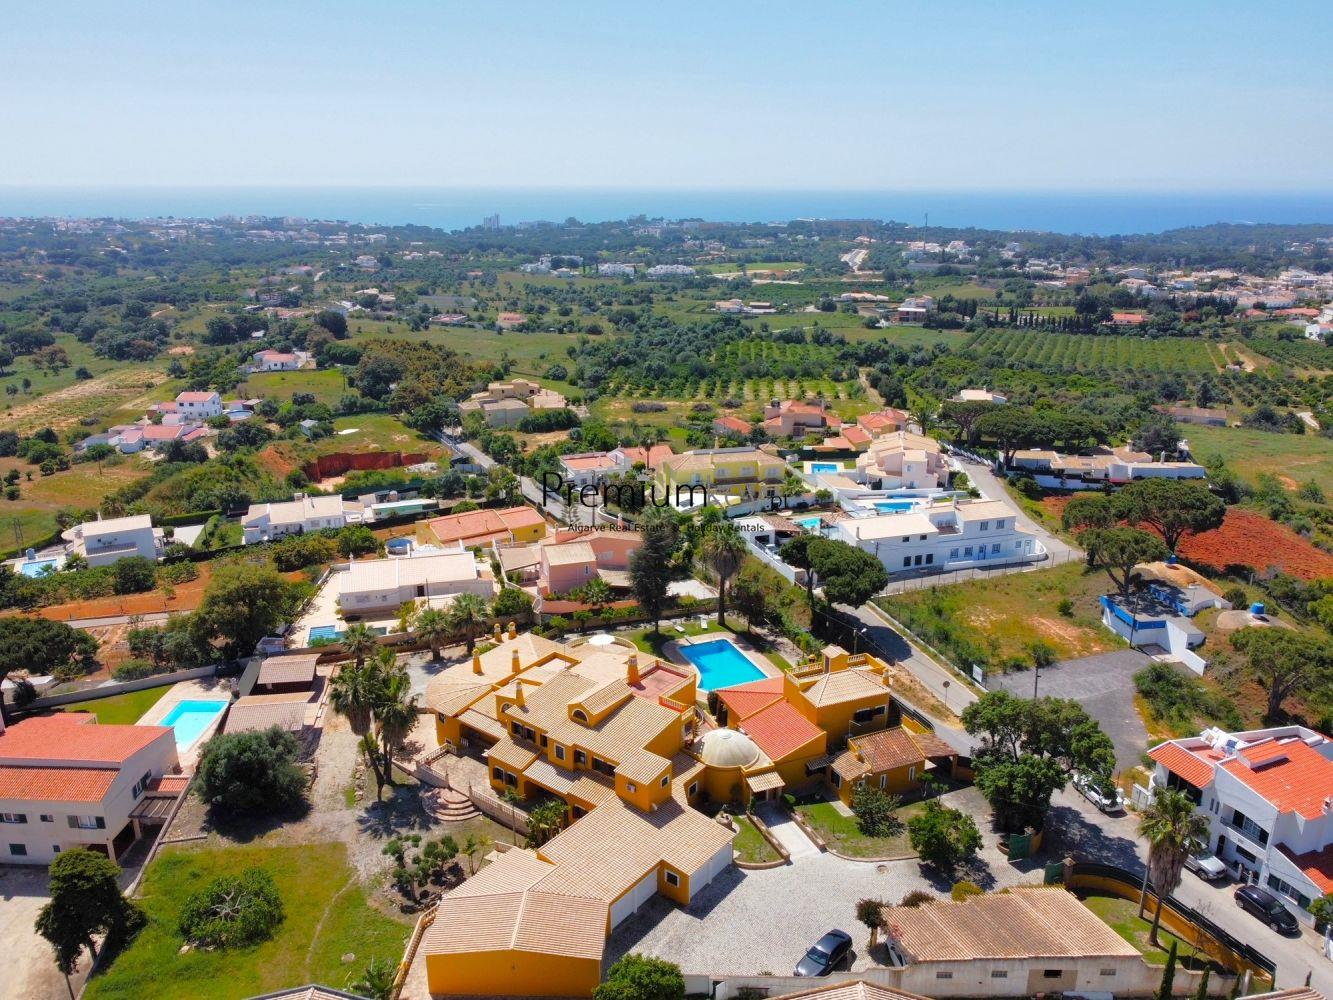 5 bedroom luxury villa with pool in Albufeira